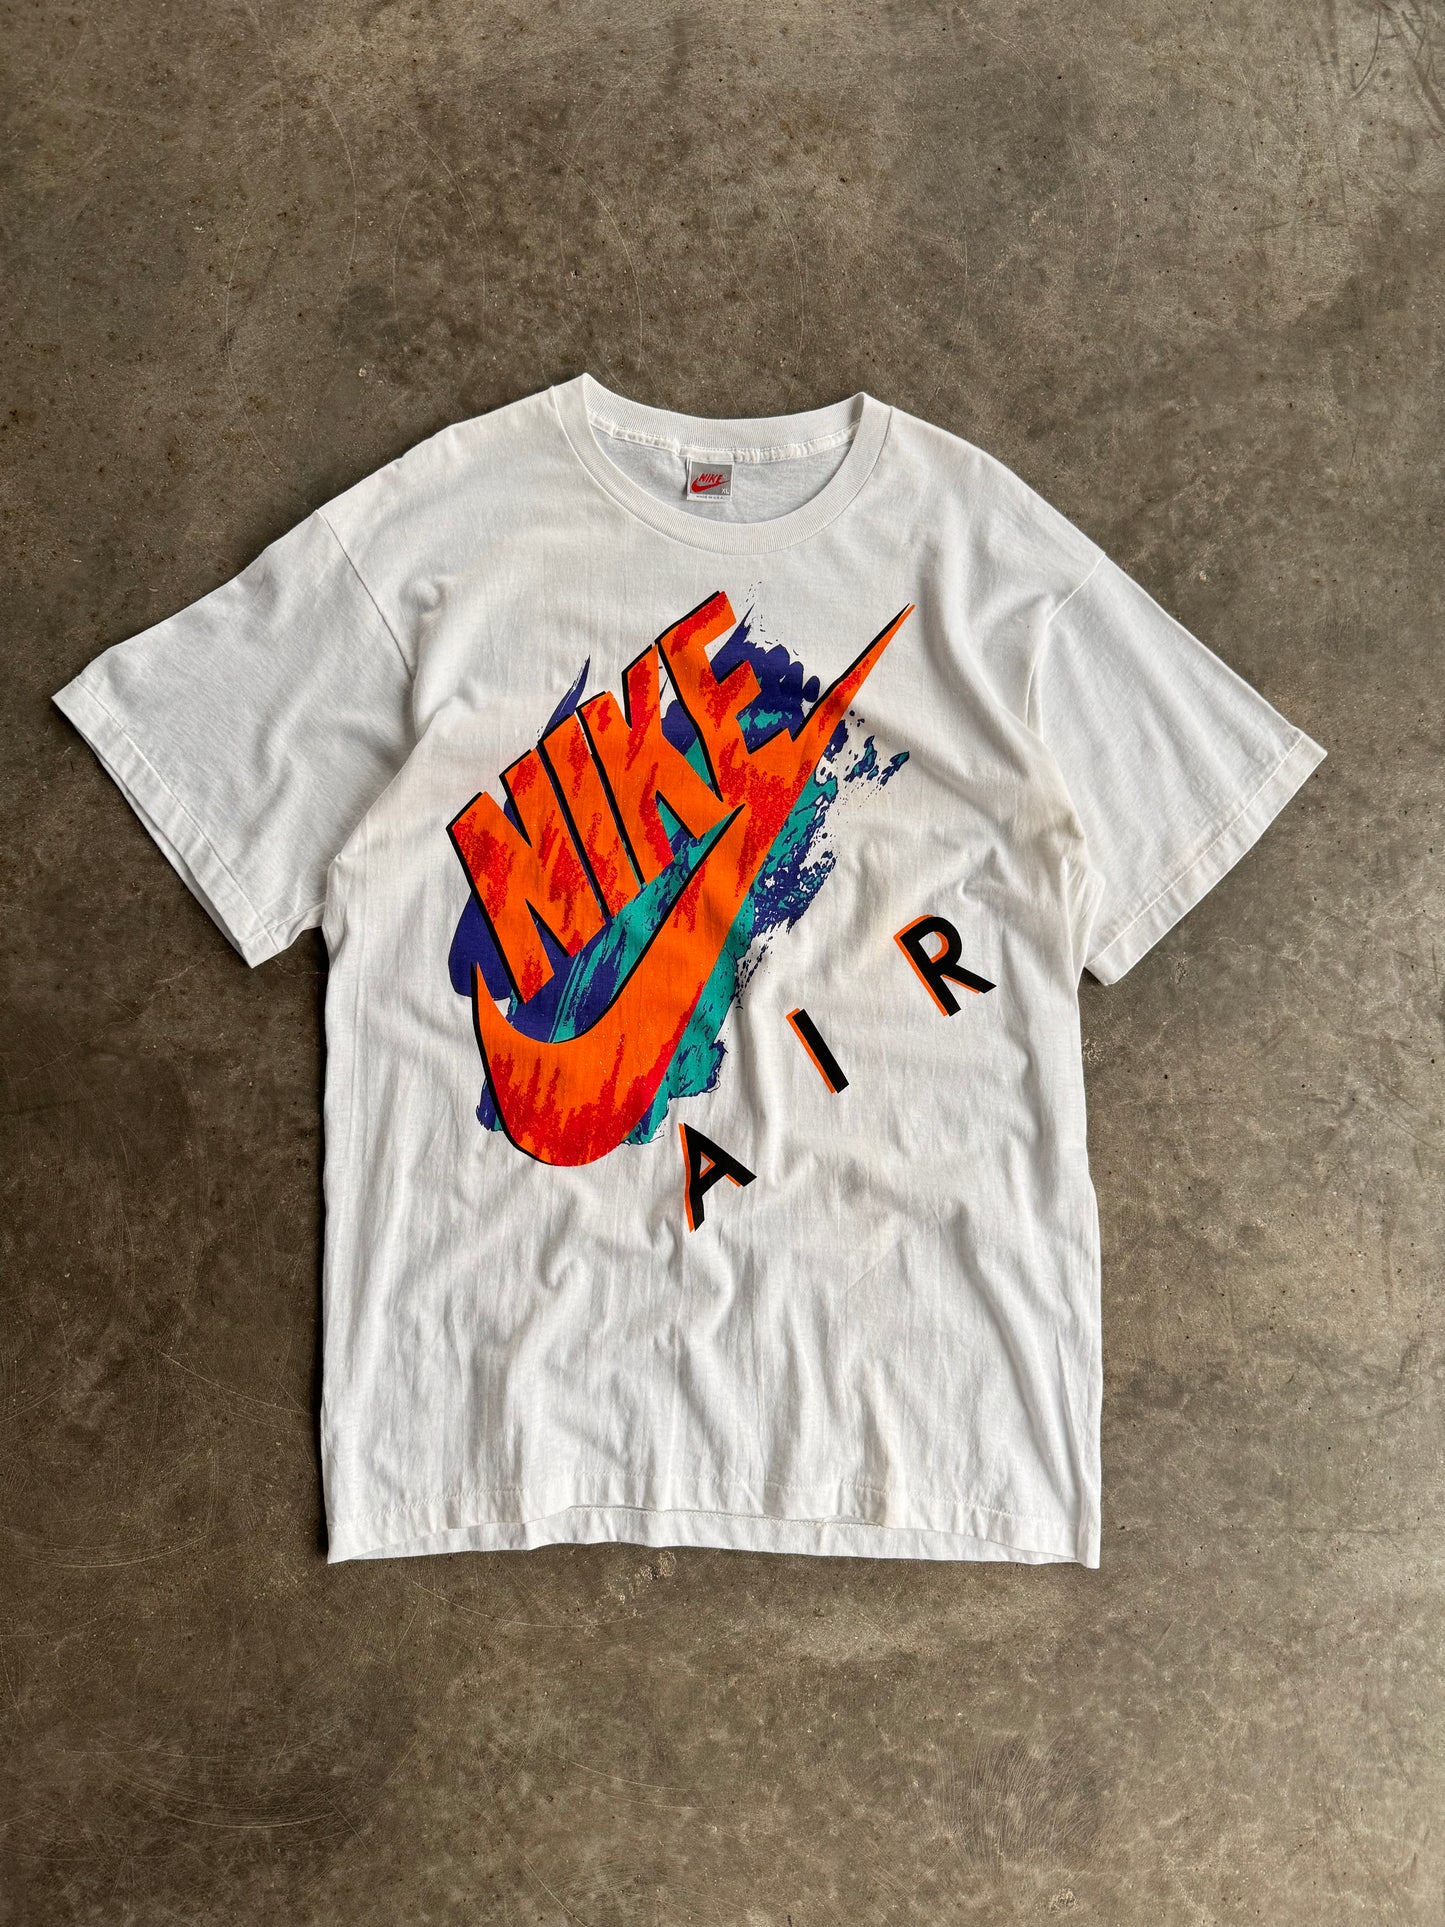 Vintage 90s Nike Air Shirt - XL